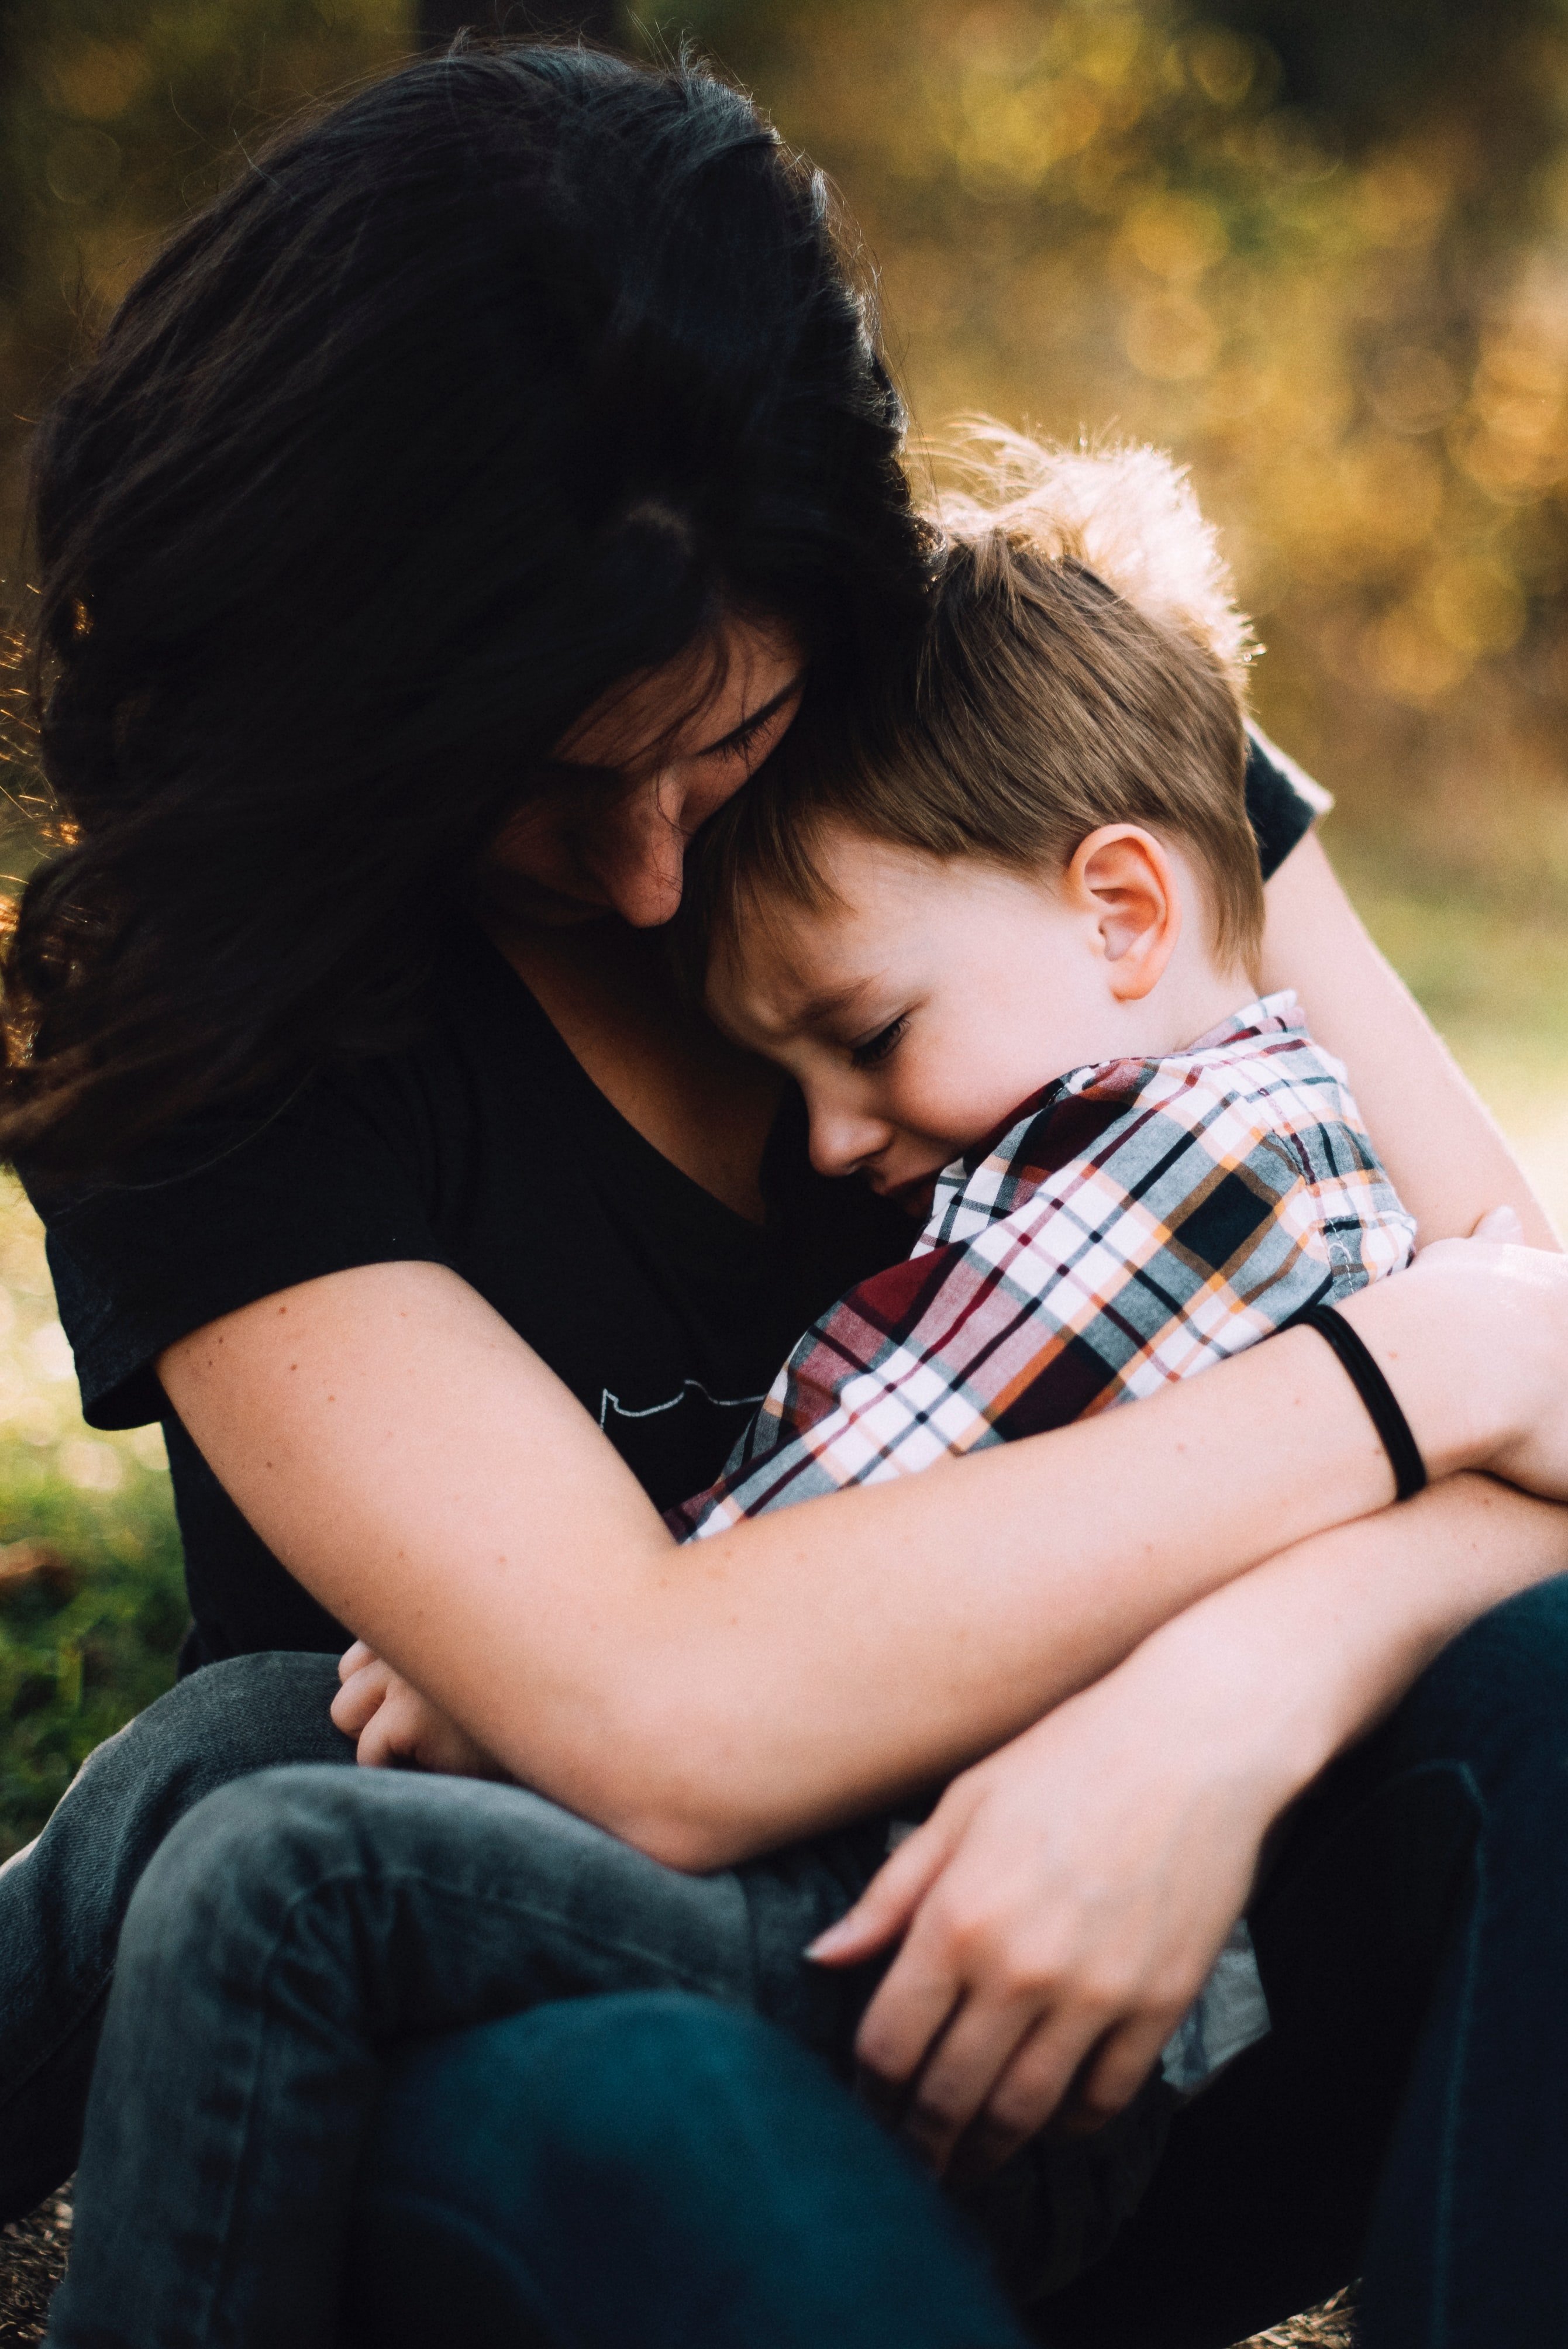 Boy in his mother's arms | Photo: Unsplash/jwwhitt 